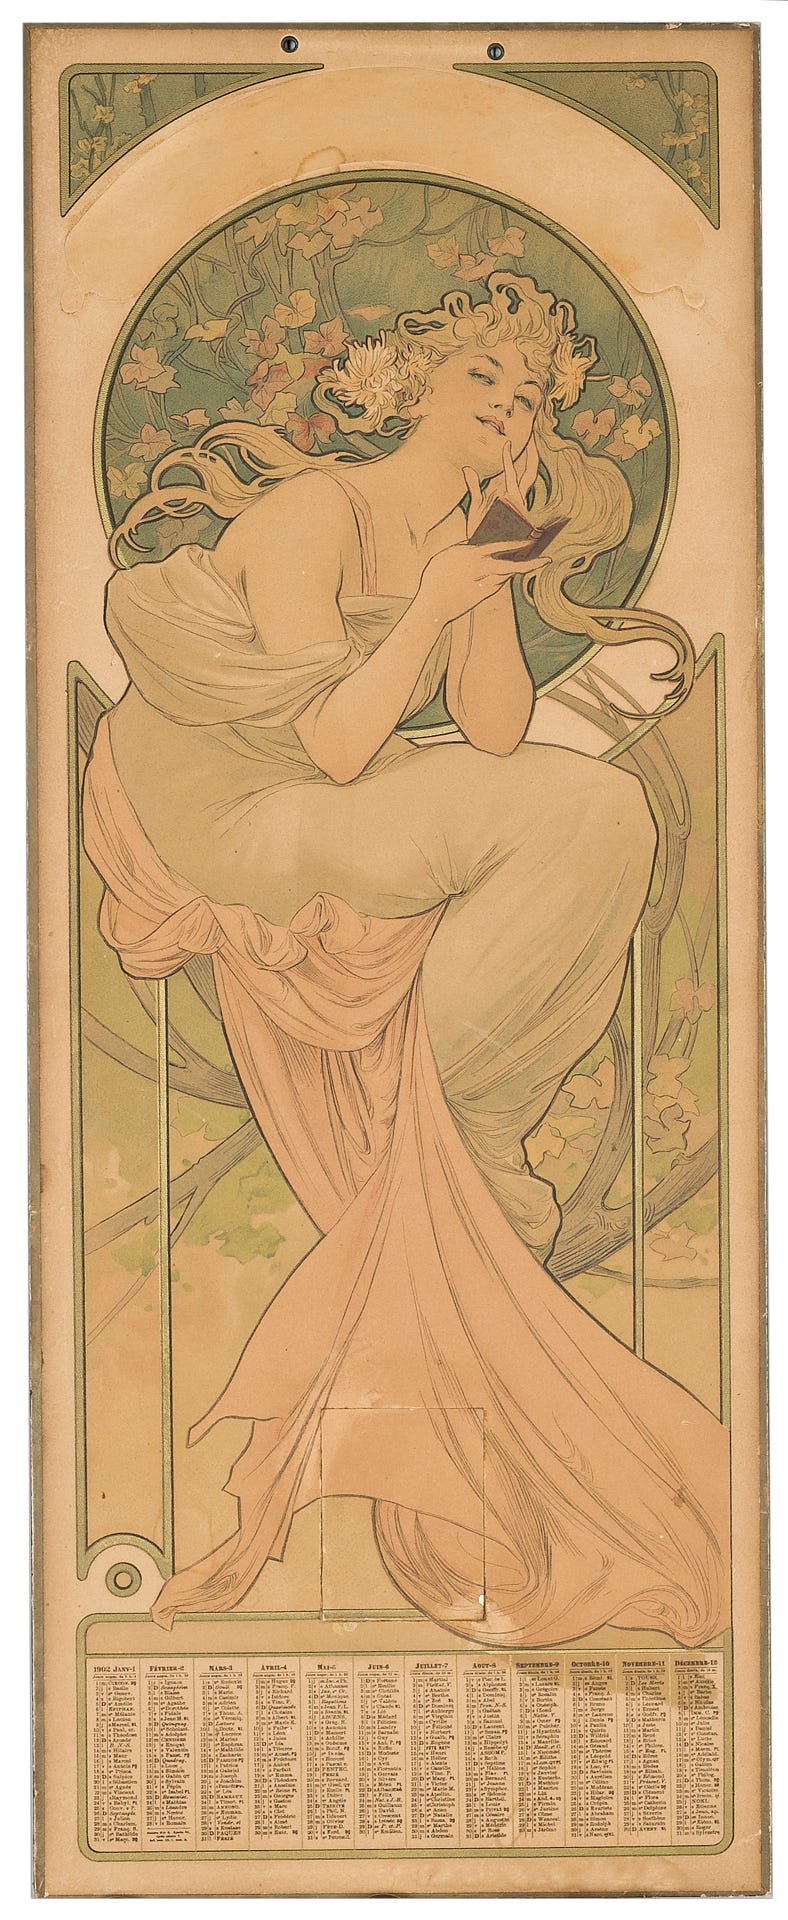 1902 calendar (1902) by Alphonse Mucha